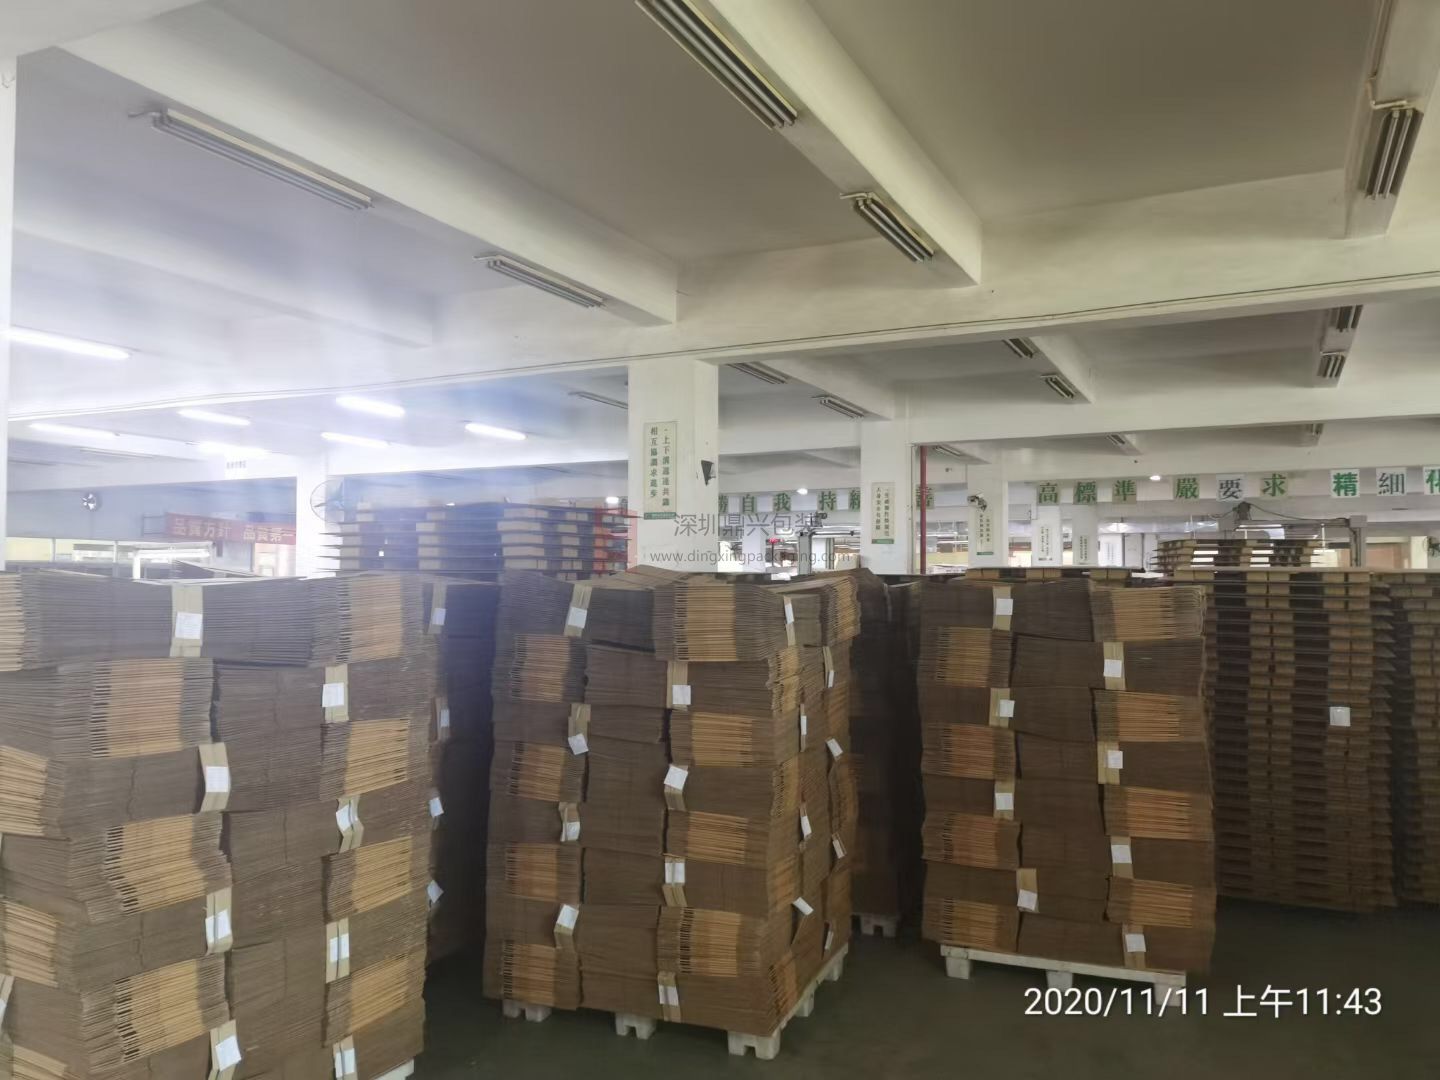 Light carton warehouse area